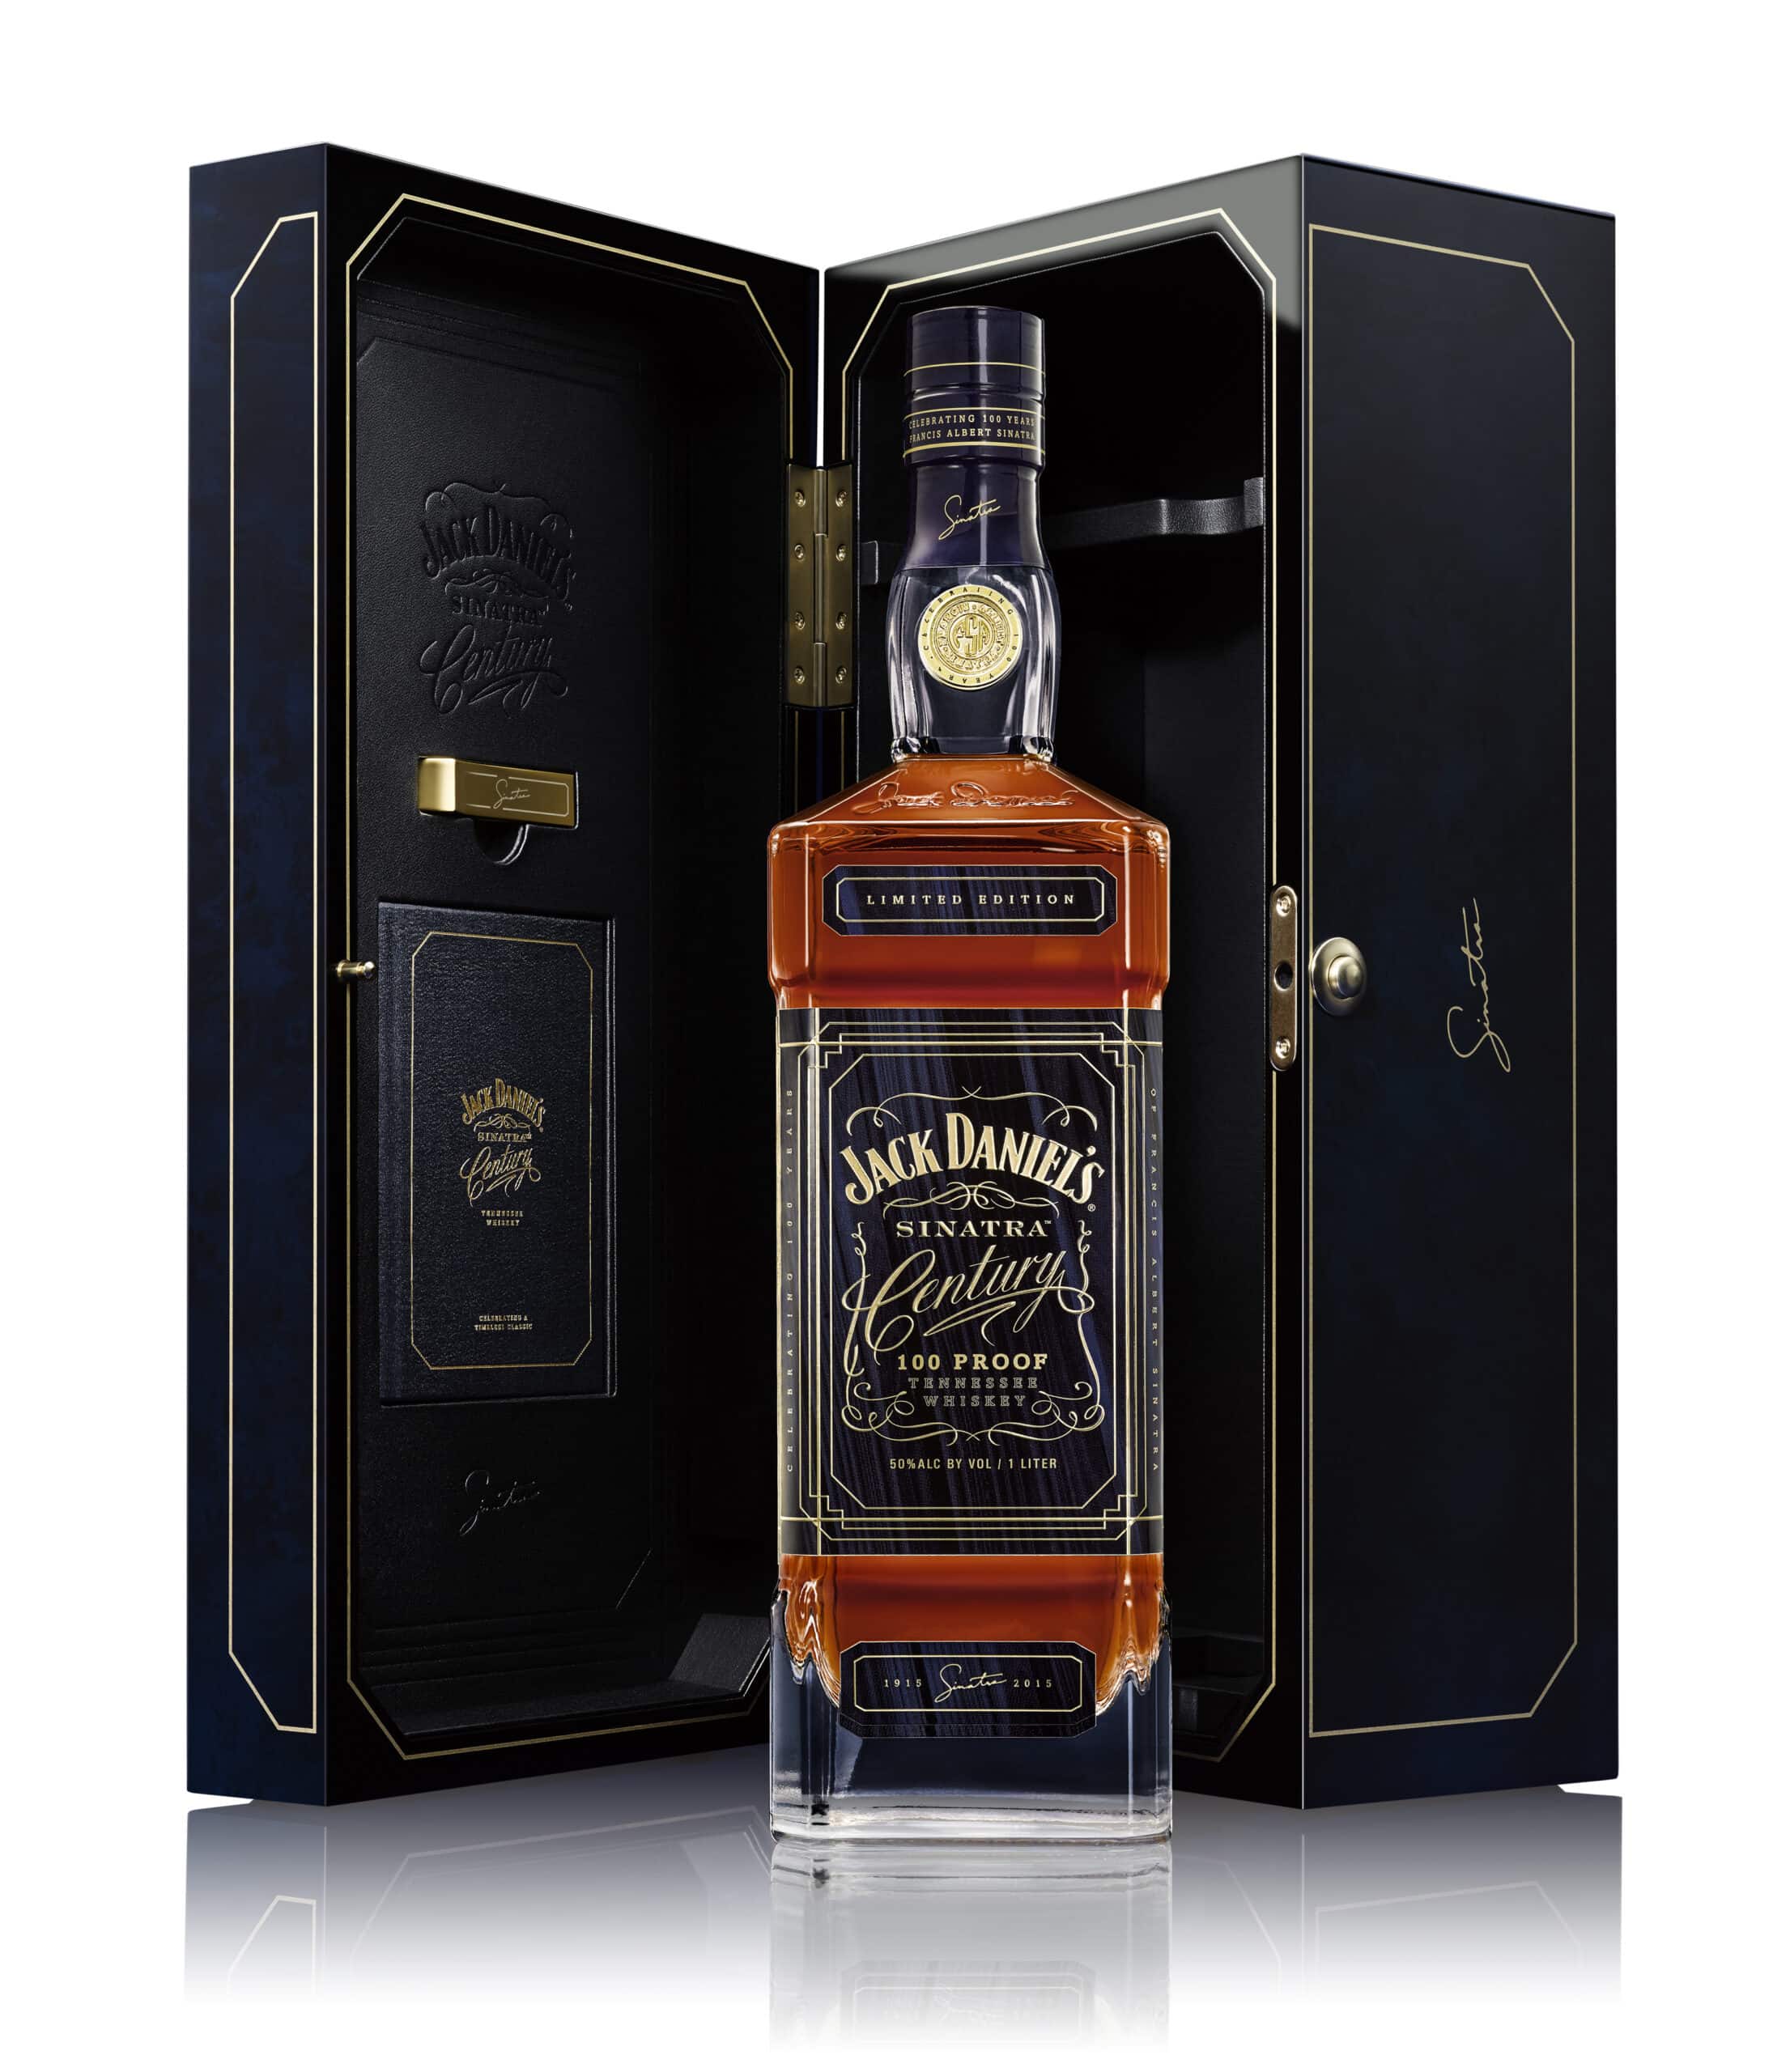 Bottiglia di whisky Sinatra Jack Daniels